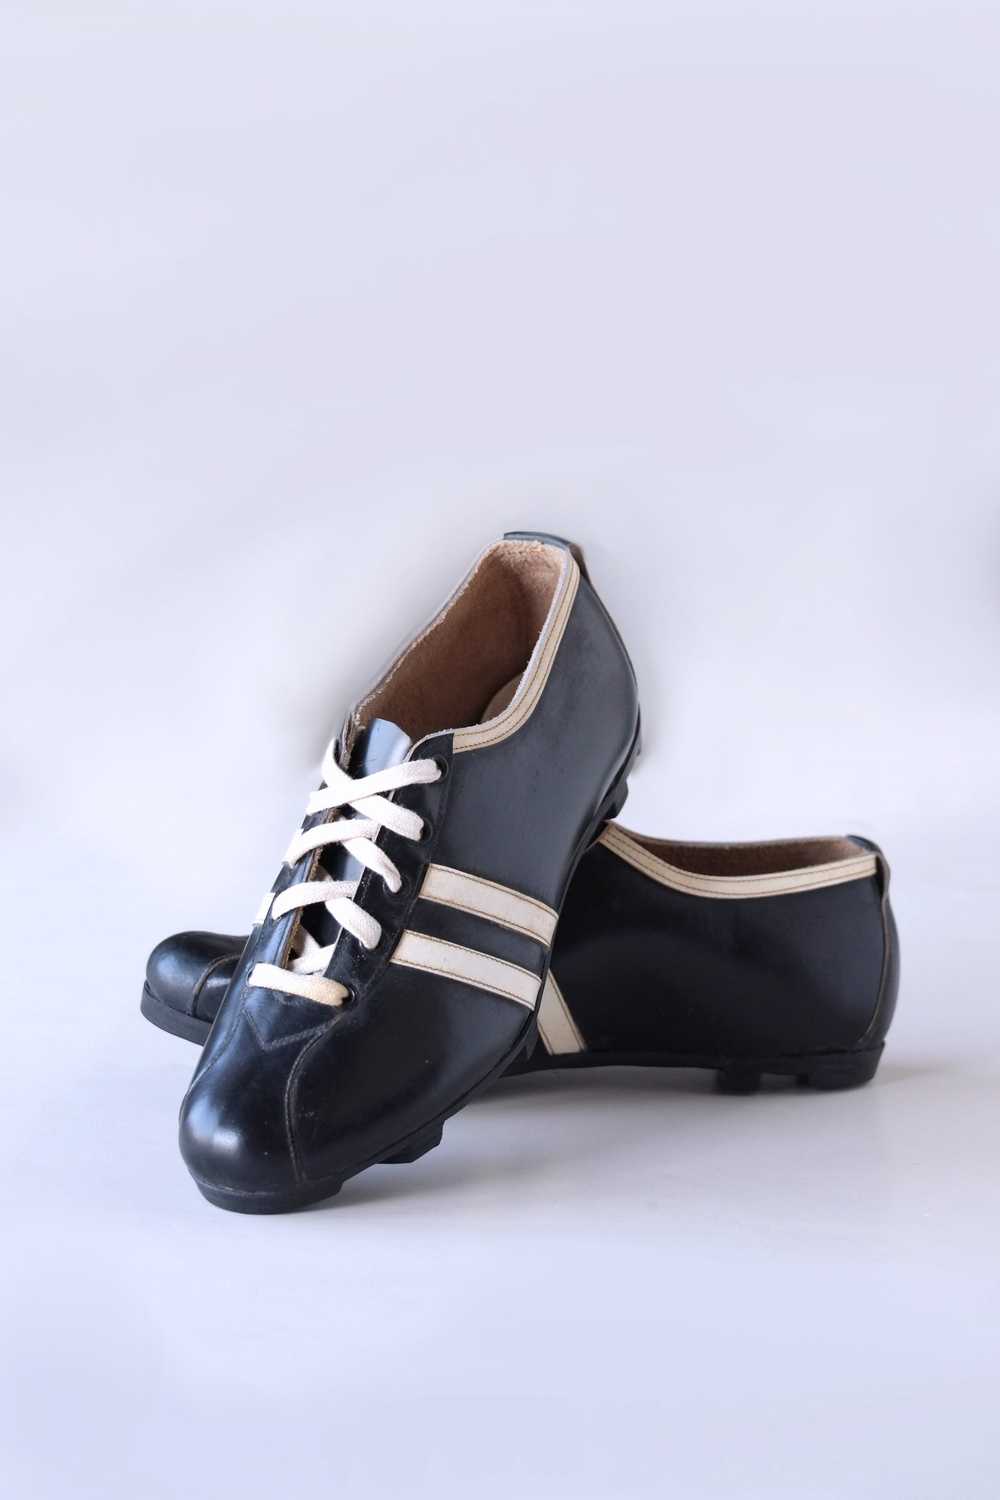 RARE 1960's Football Boots - image 1